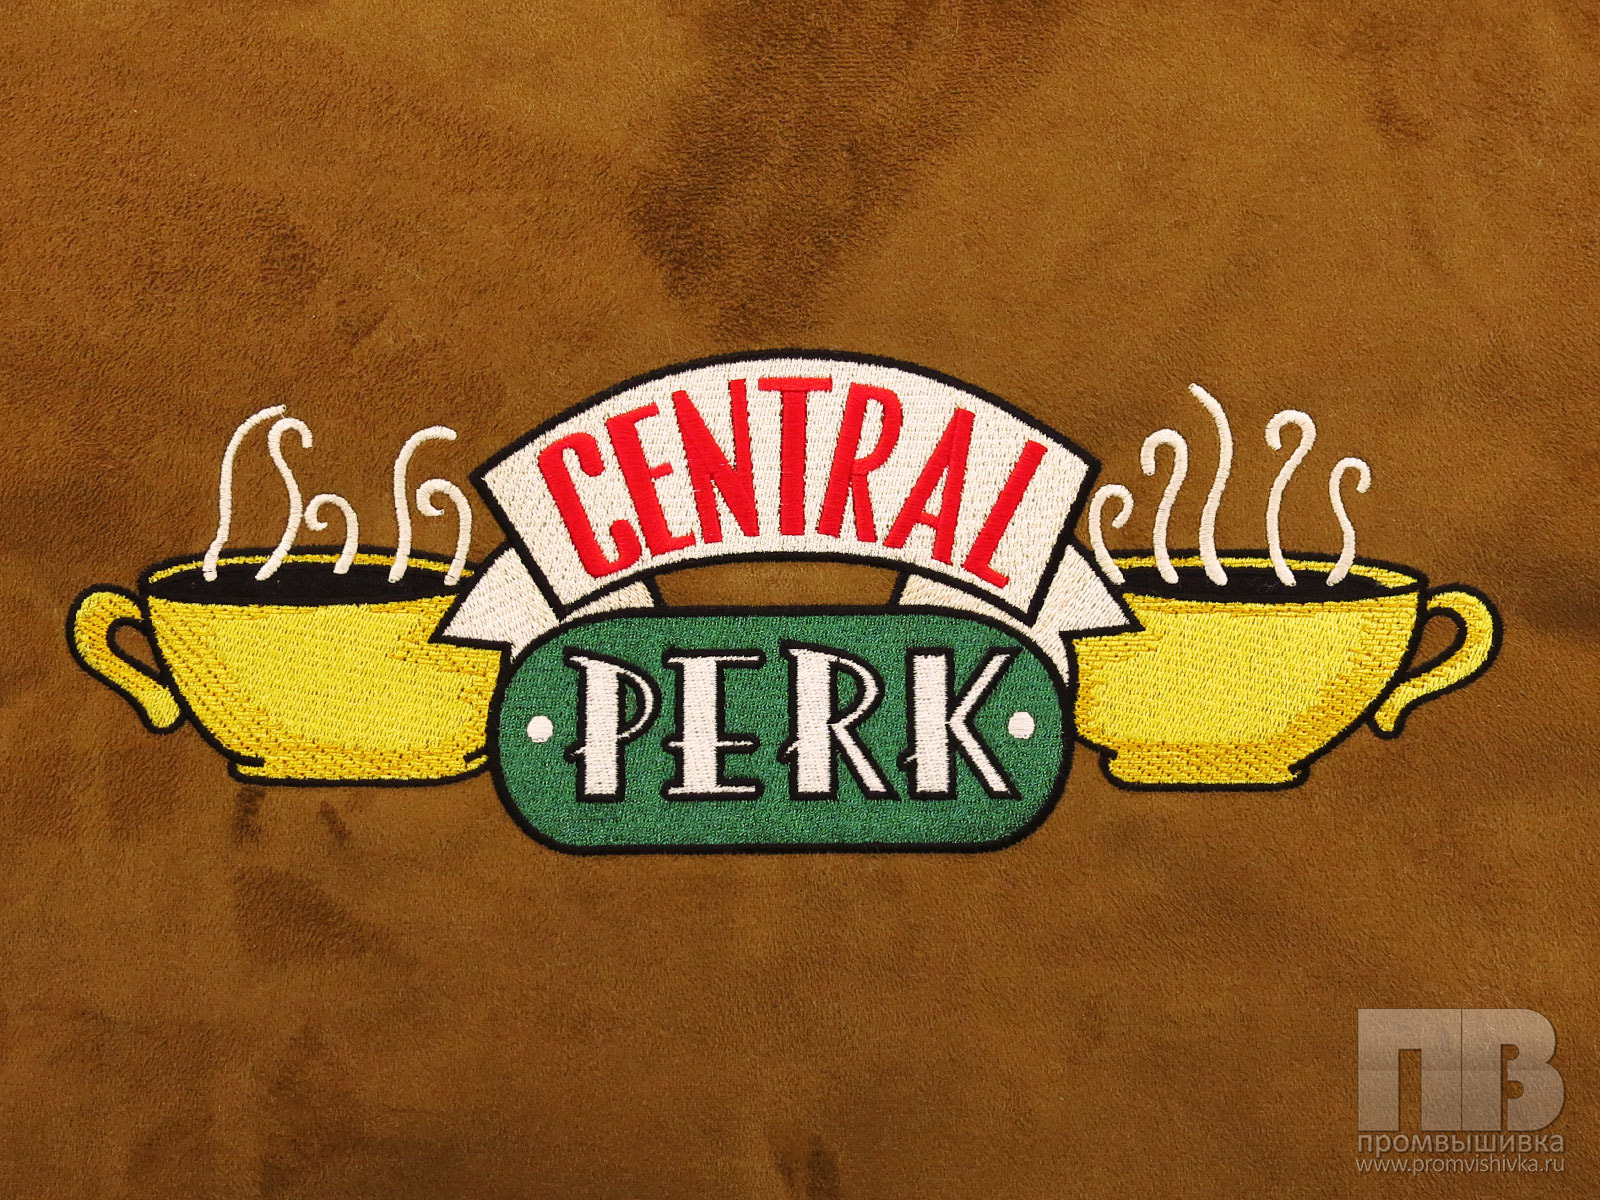 Фото вышивки на замше логотипа Central Perk.